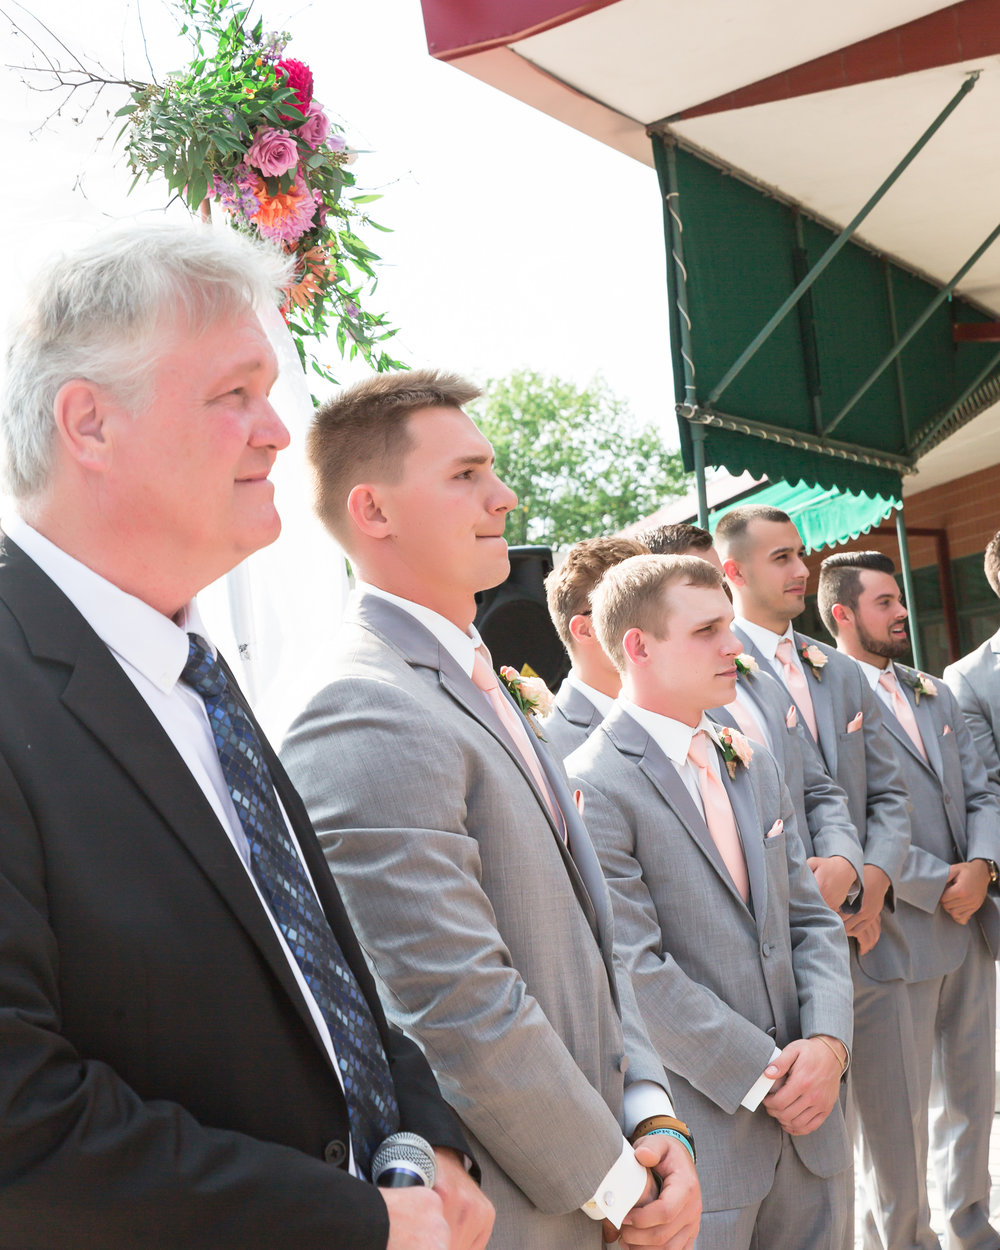 SSP fall wedding| ceremony| groom and groomsmen| peach and gray wedding